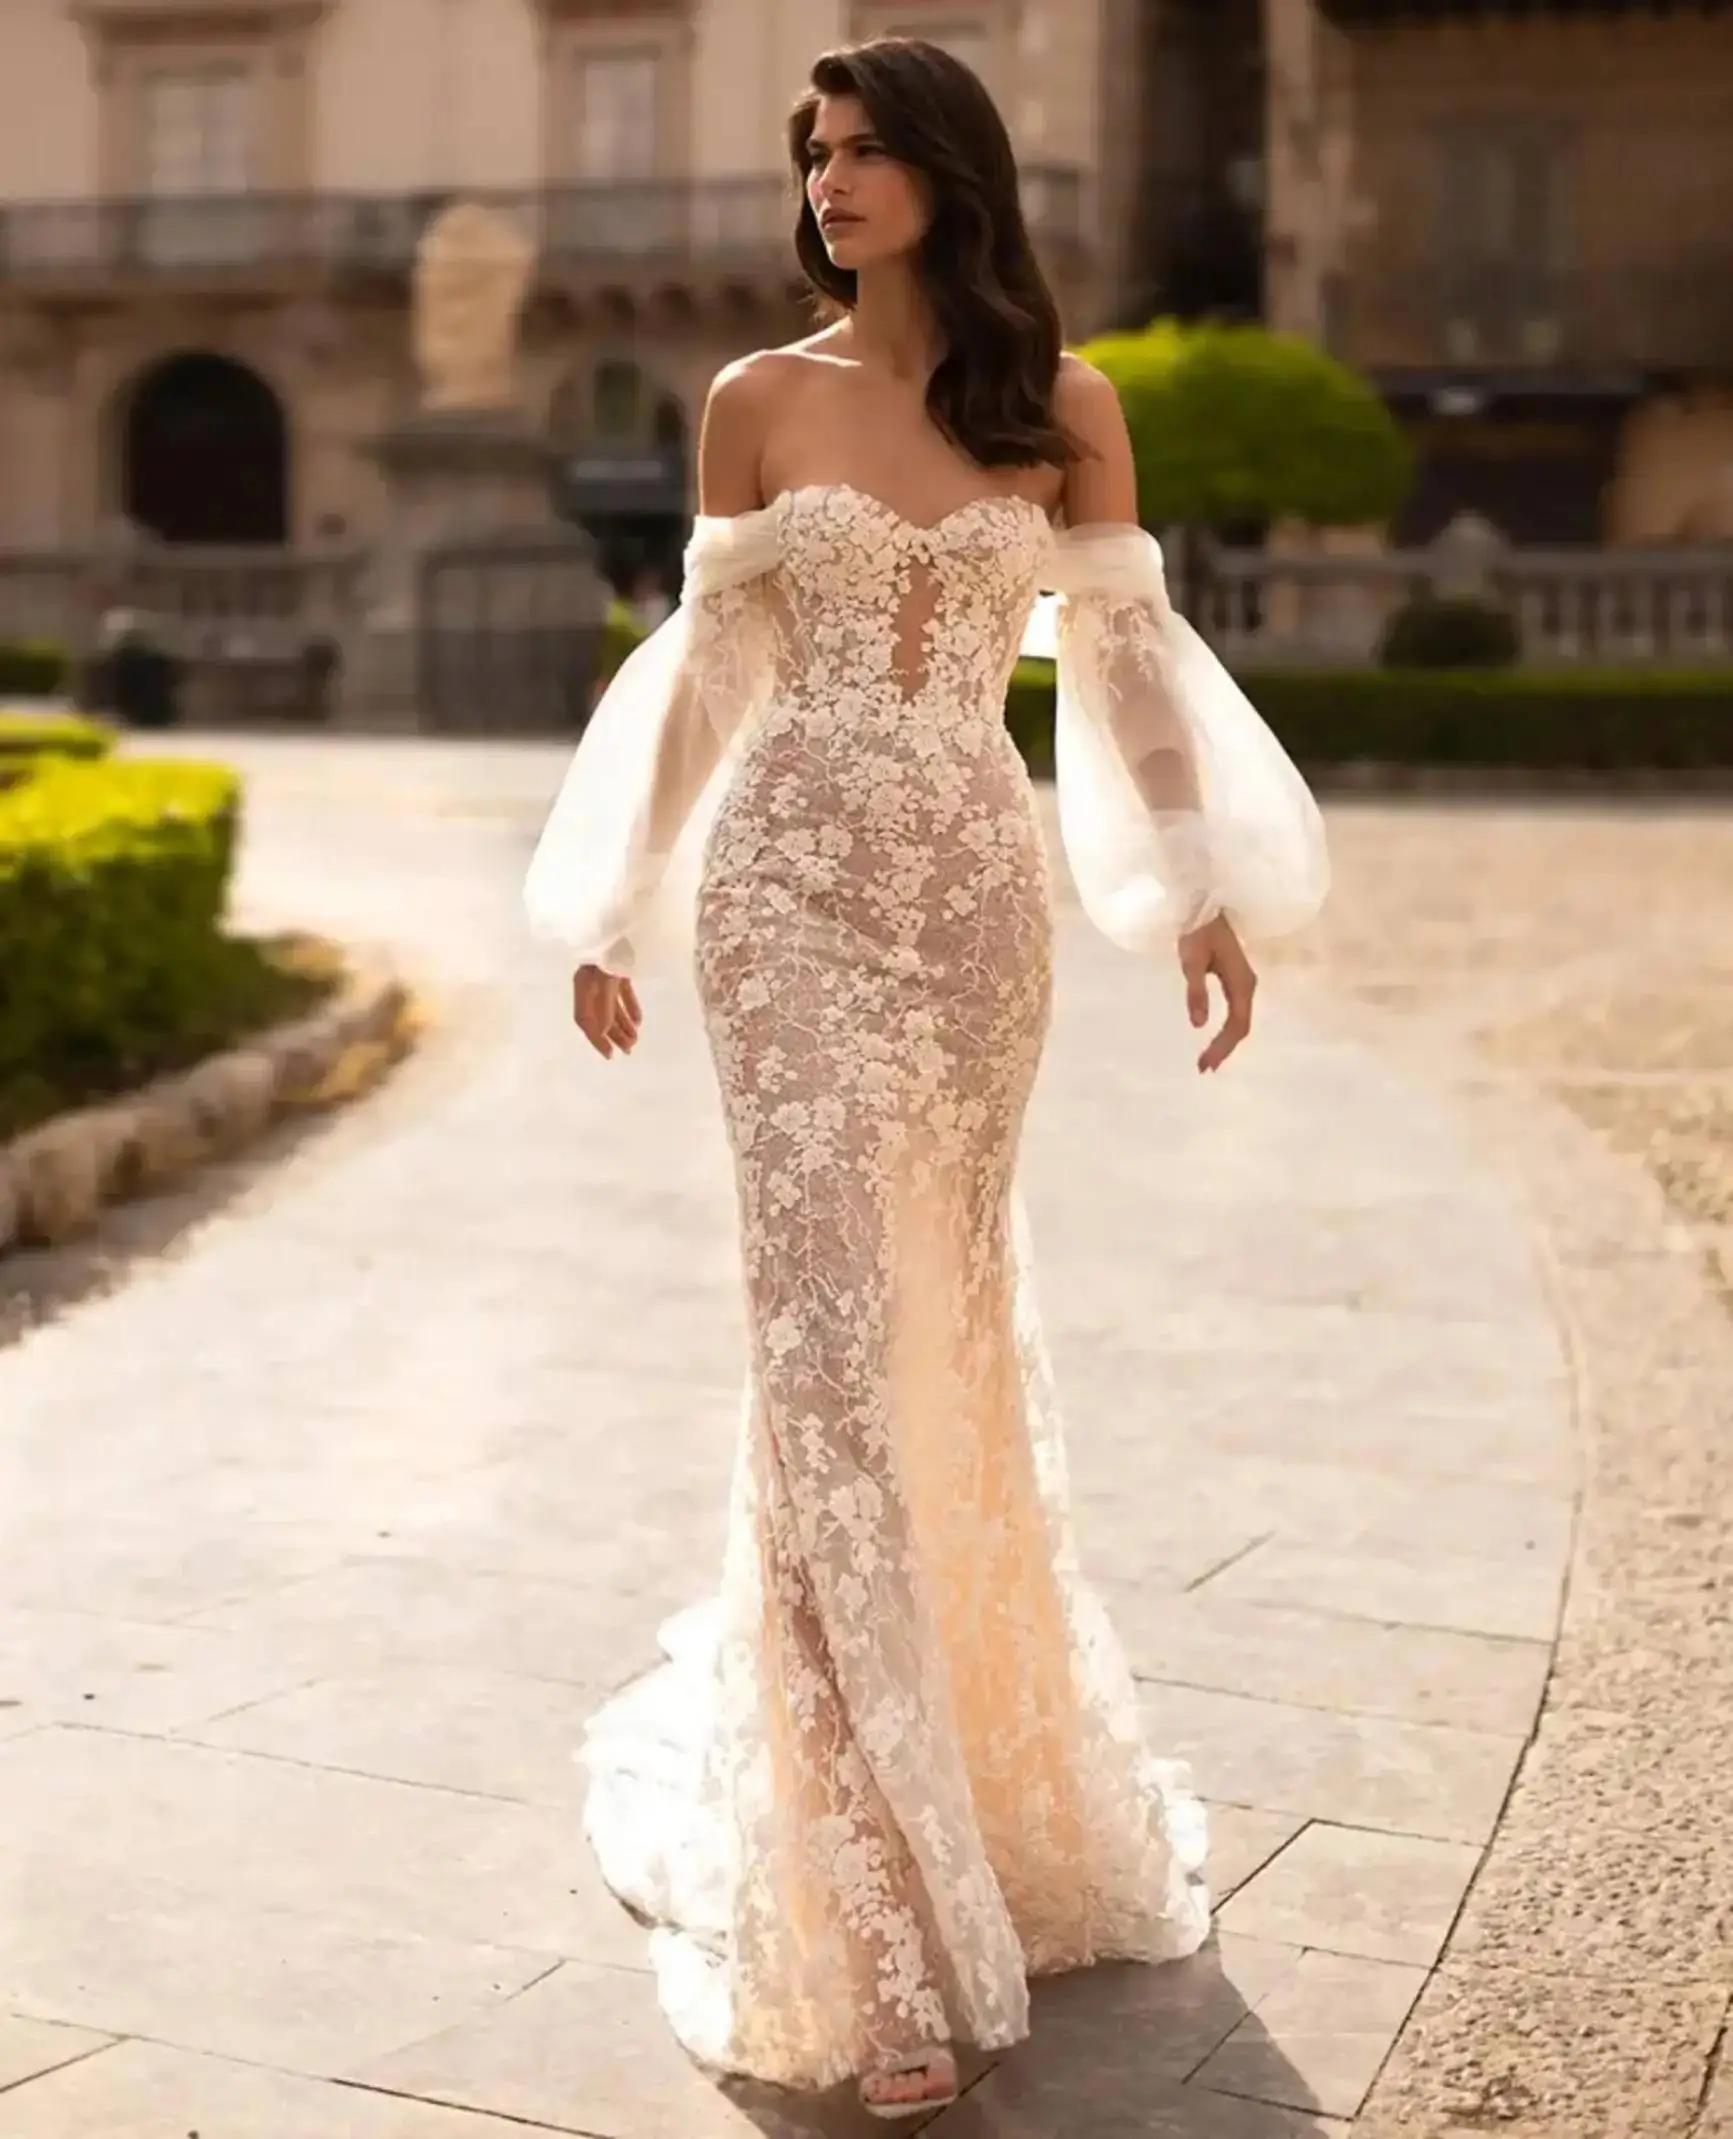 Sun-Kissed Elegance: Choosing the Perfect Summer Style Wedding Dress Image